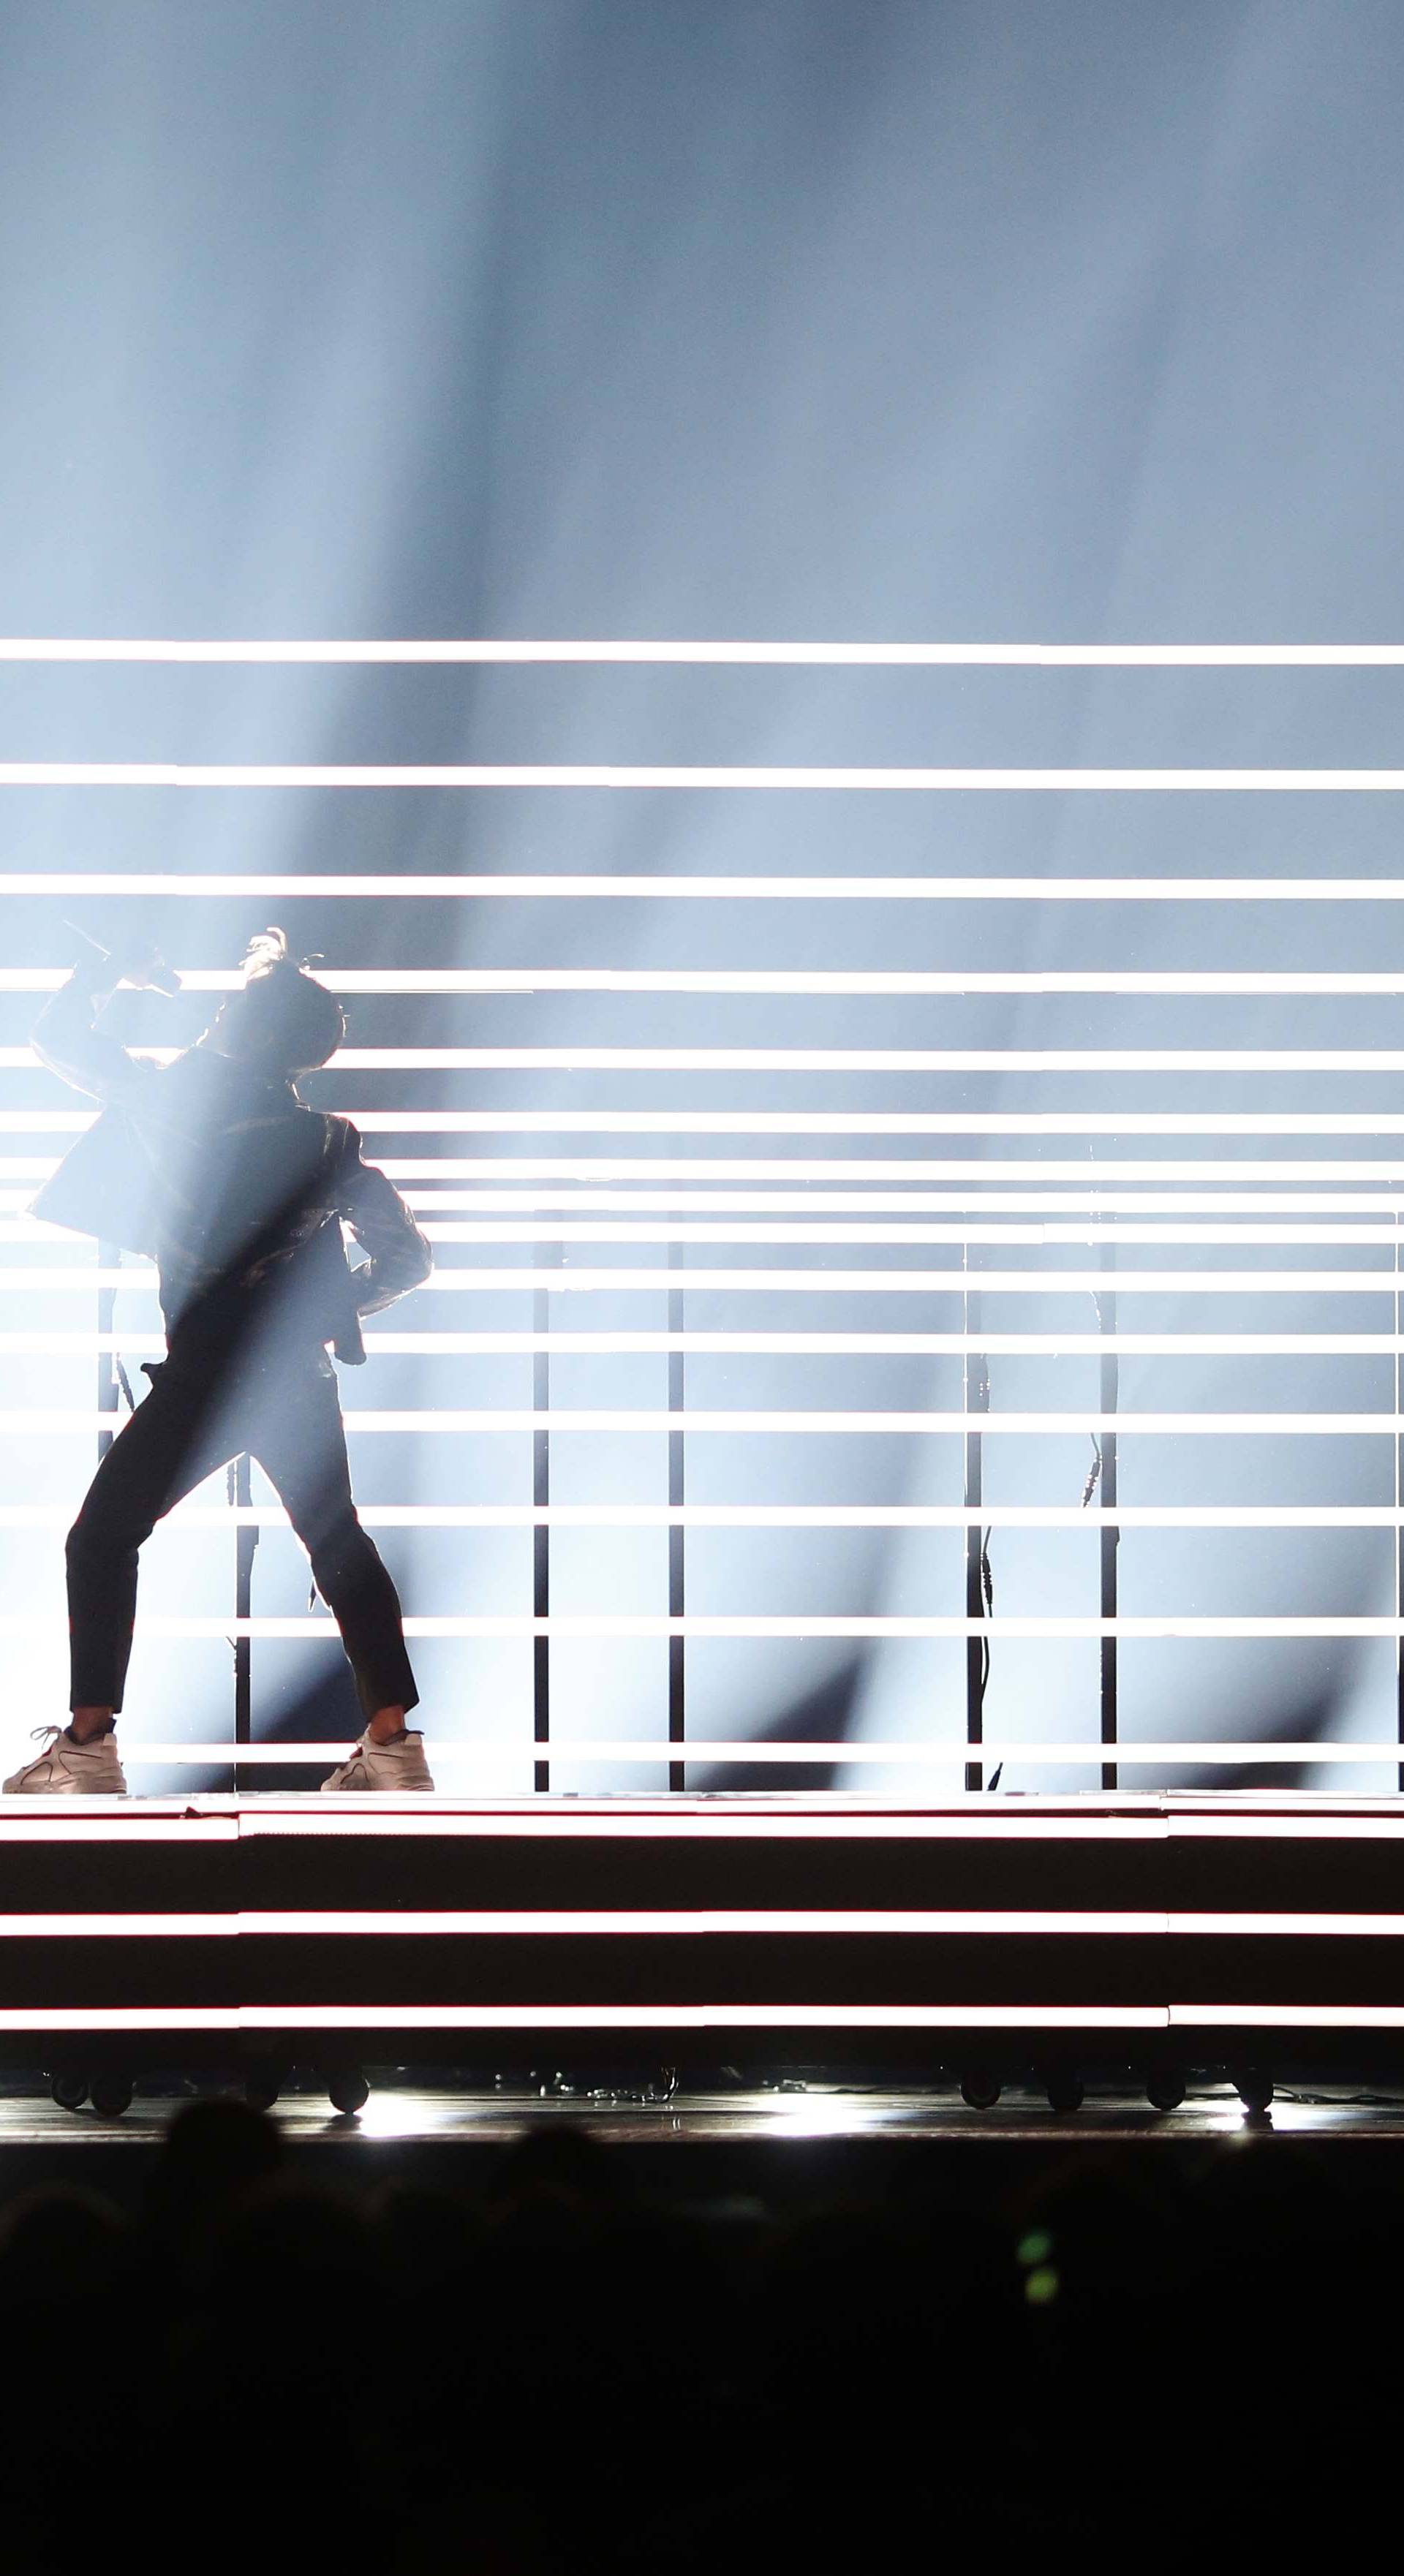 Swedenâs Benjamin Ingrosso performs âDance You Offâ during the Semi-Final 2 for Eurovision Song Contest 2018 in Lisbon